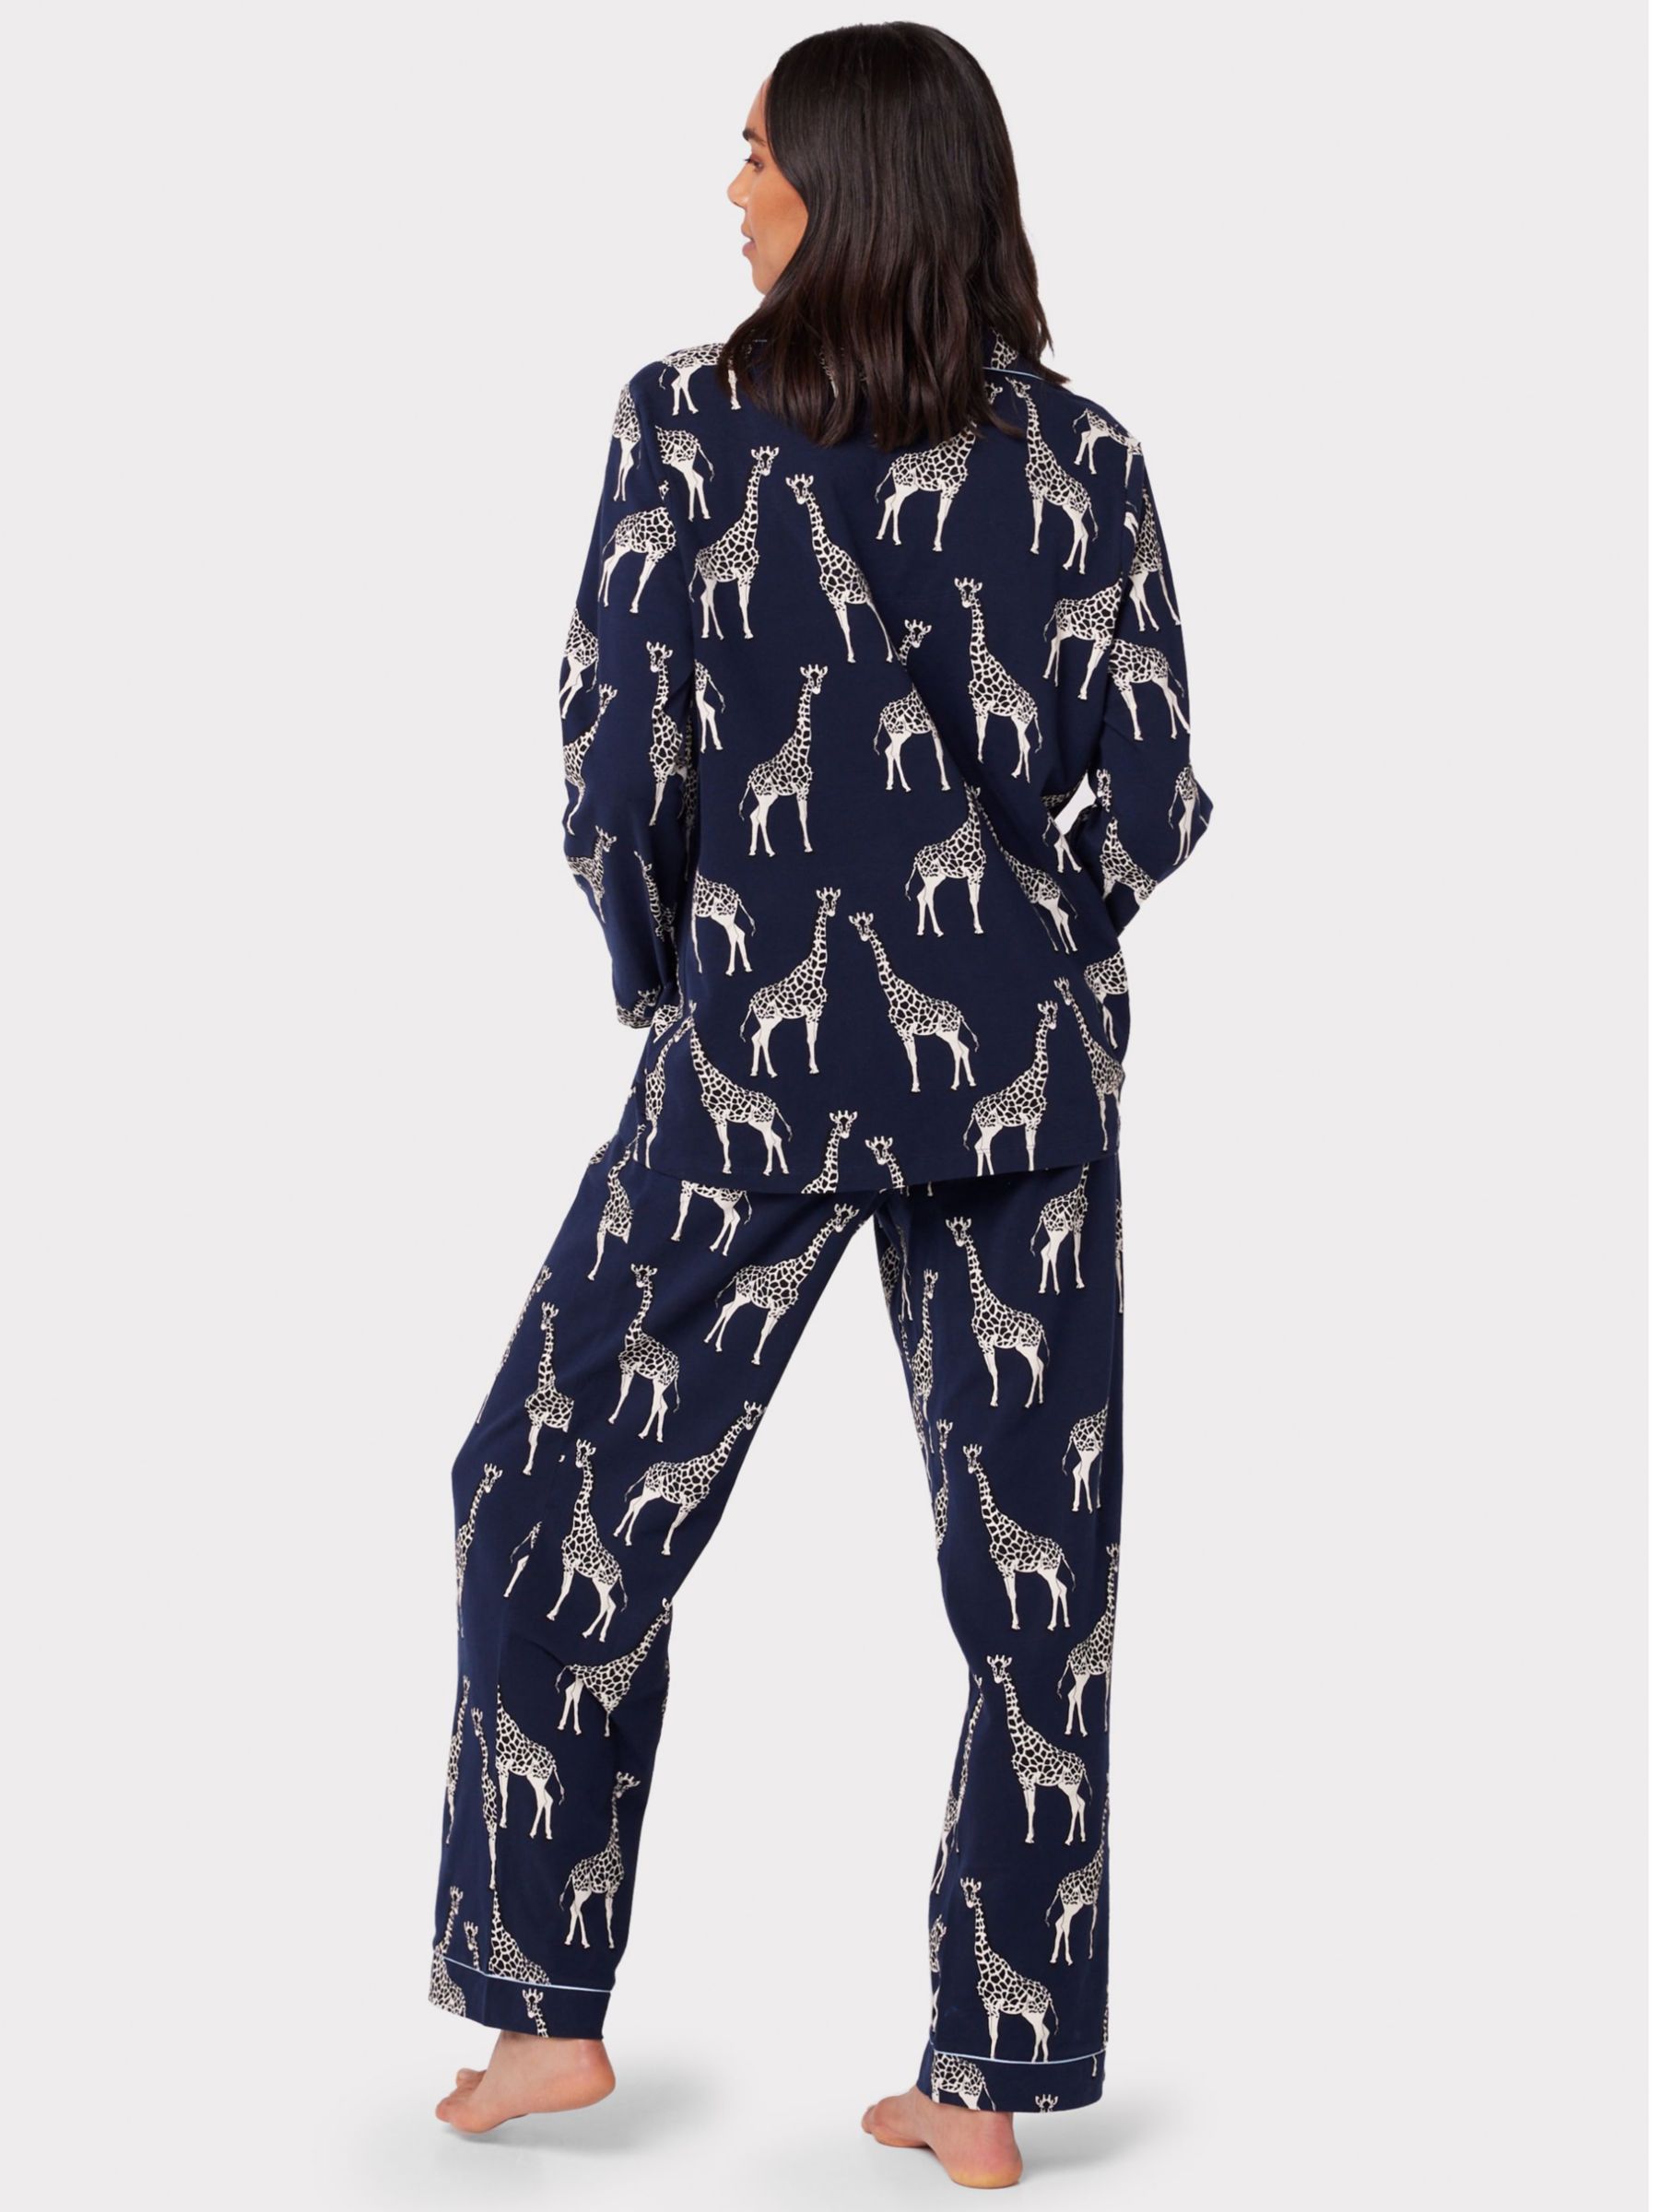 Buy Chelsea Peers Maternity Organic Cotton Blend Giraffe Print Pyjama Set, Navy Online at johnlewis.com